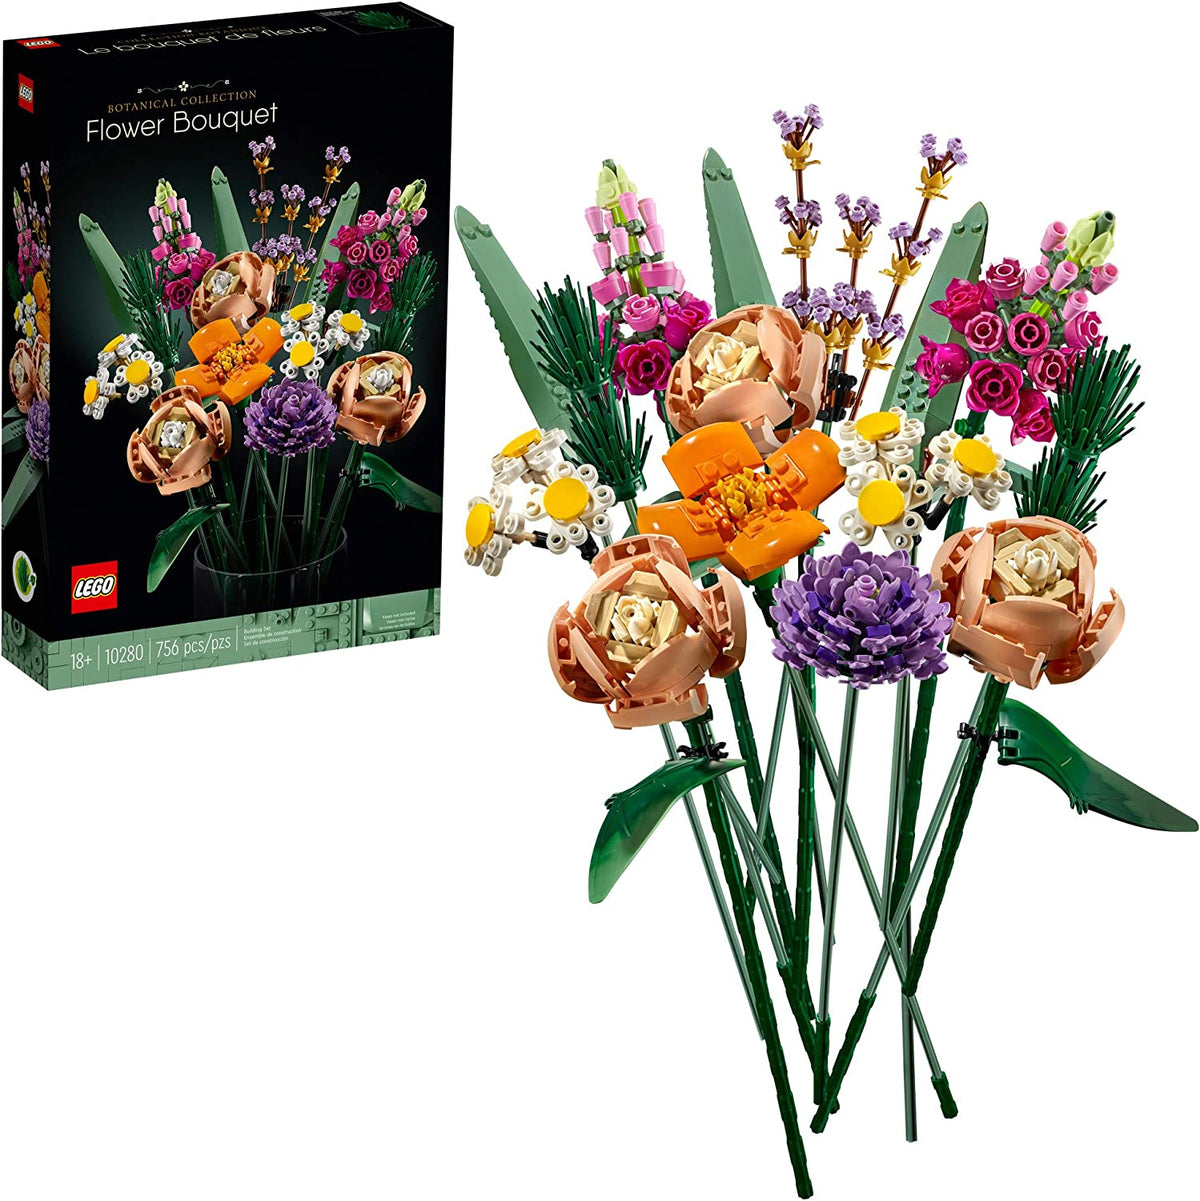 BOTANICAL COLLECTION 10280: Flower Bouquet